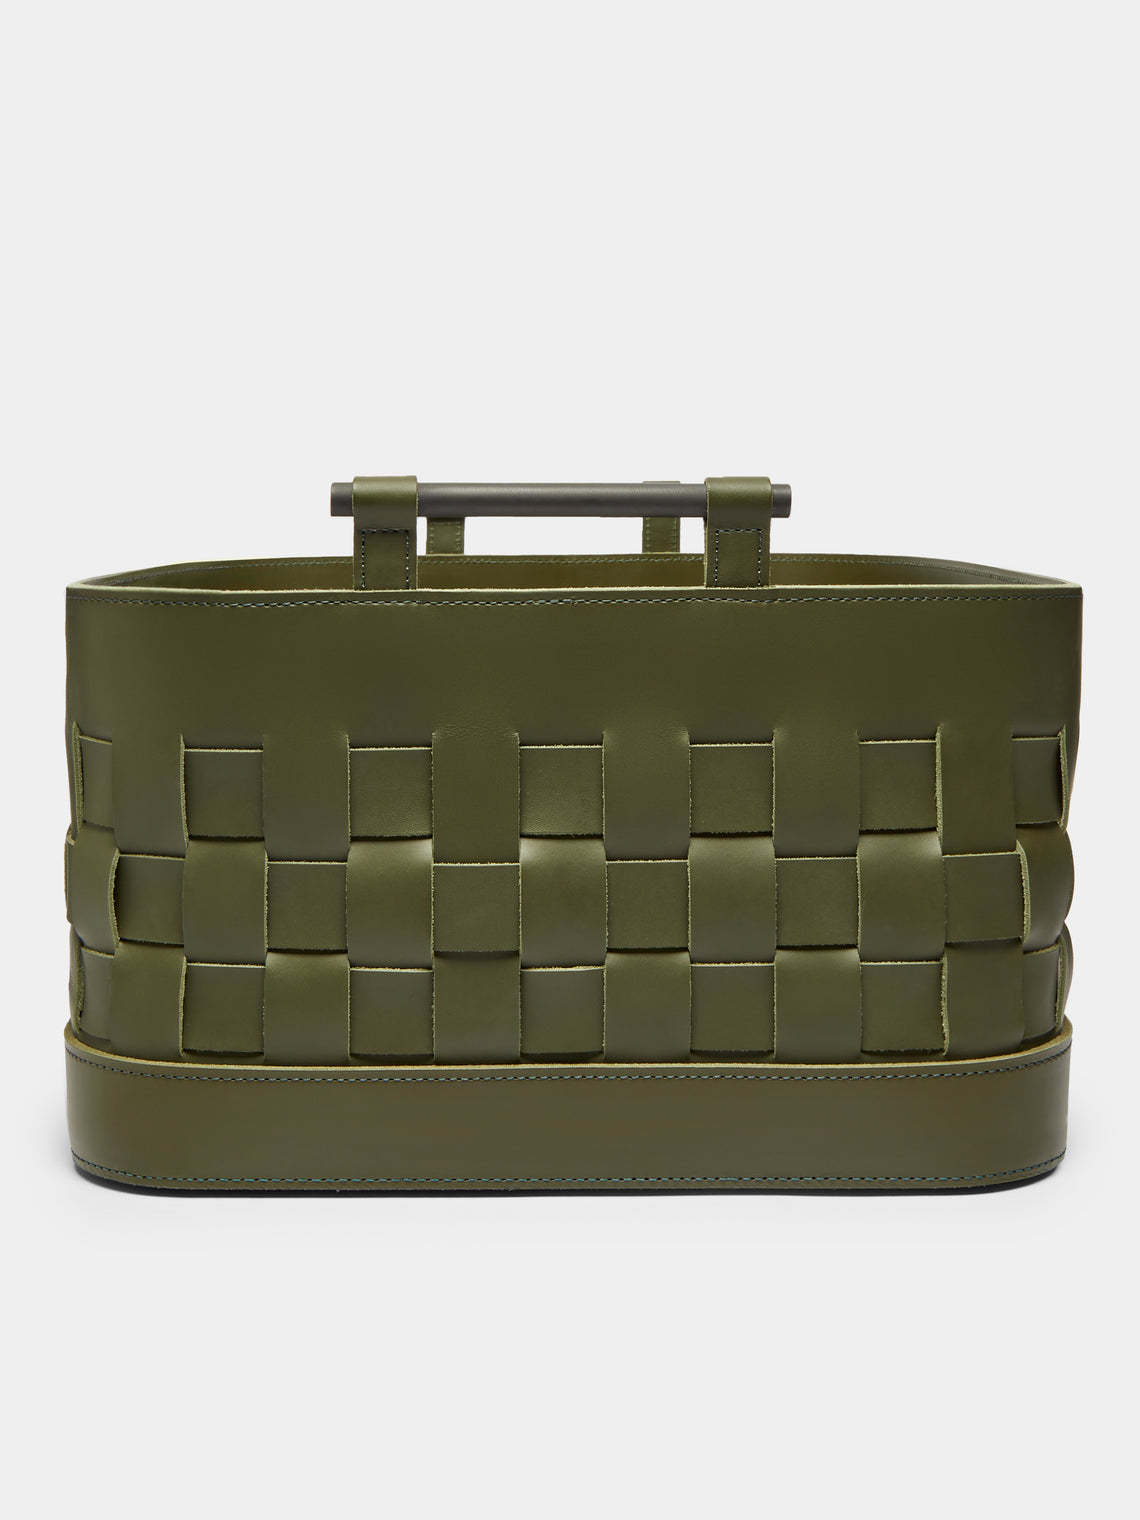 Rabitti 1969 - Ravenna Woven Leather Rectangular Basket - Green - ABASK